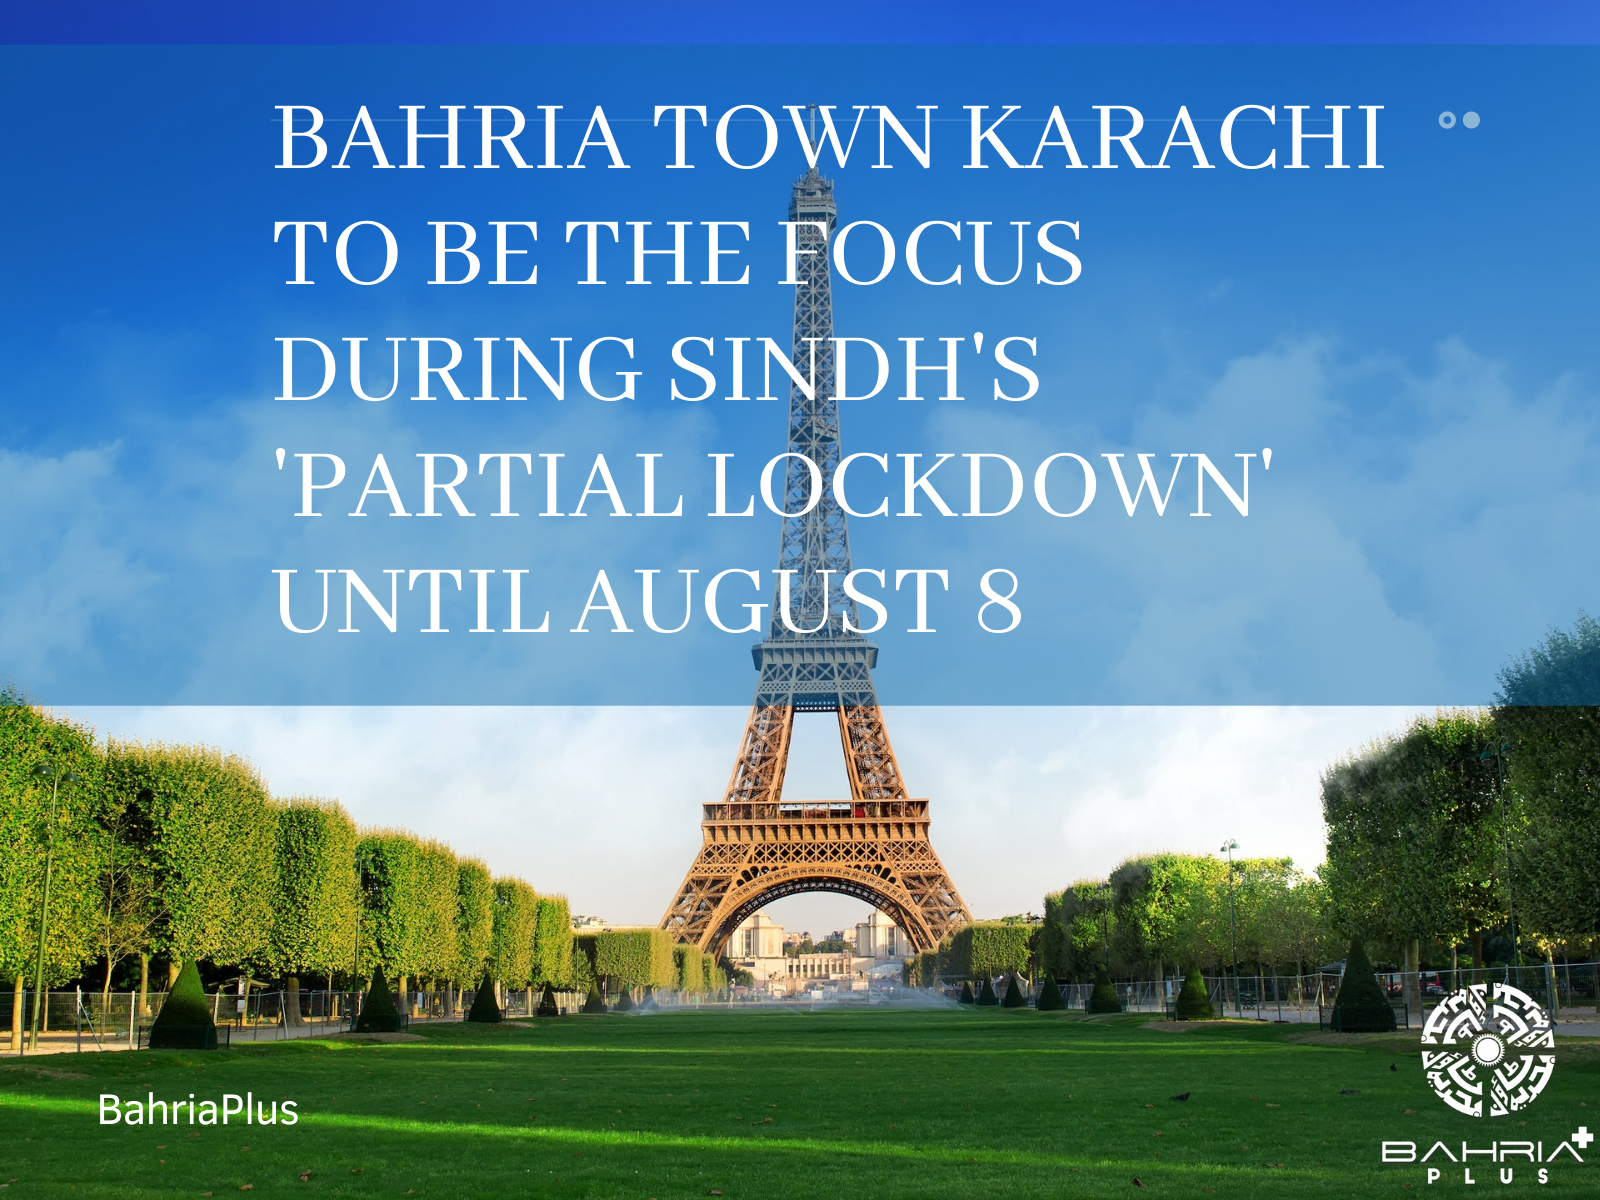 Bahria  Town Karachi to be the focus during Sindh's 'partial lockdown' until August 8